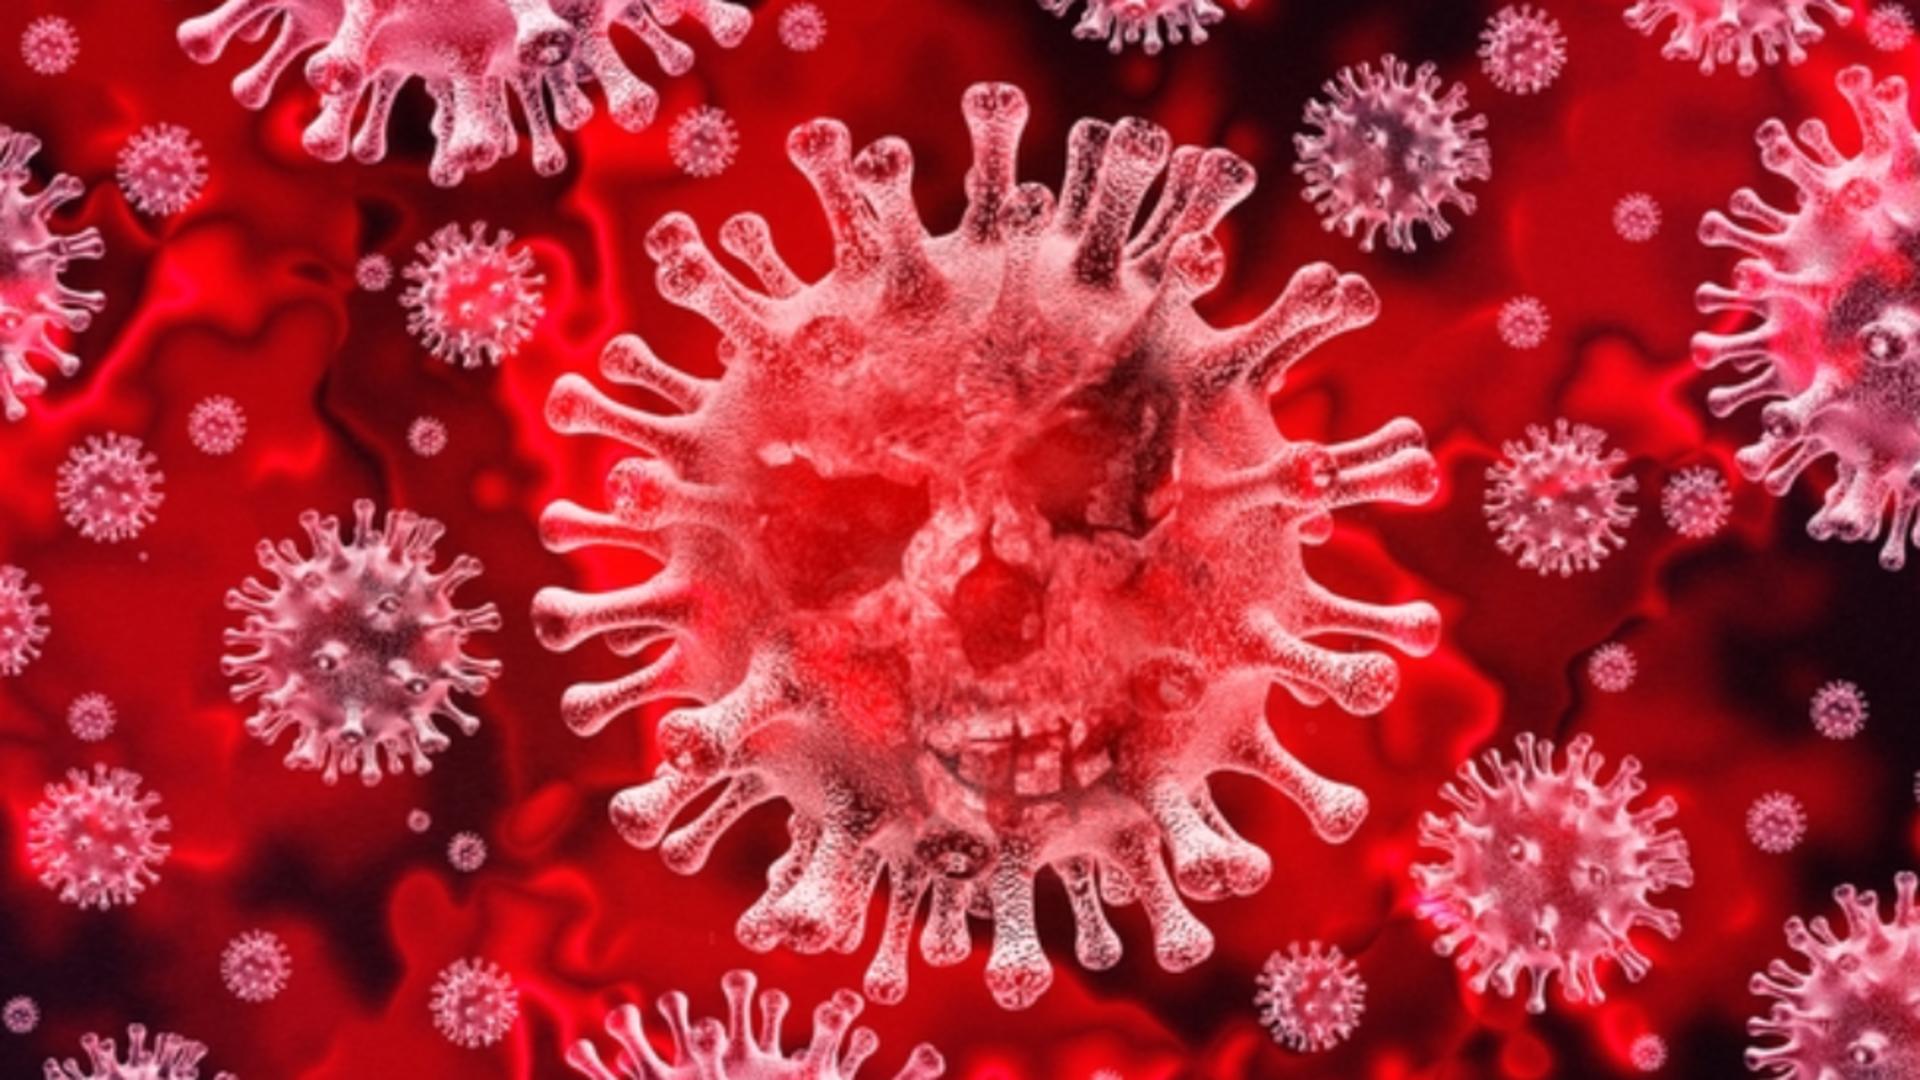 Coronavirusul face ravagii în rândul copiilor